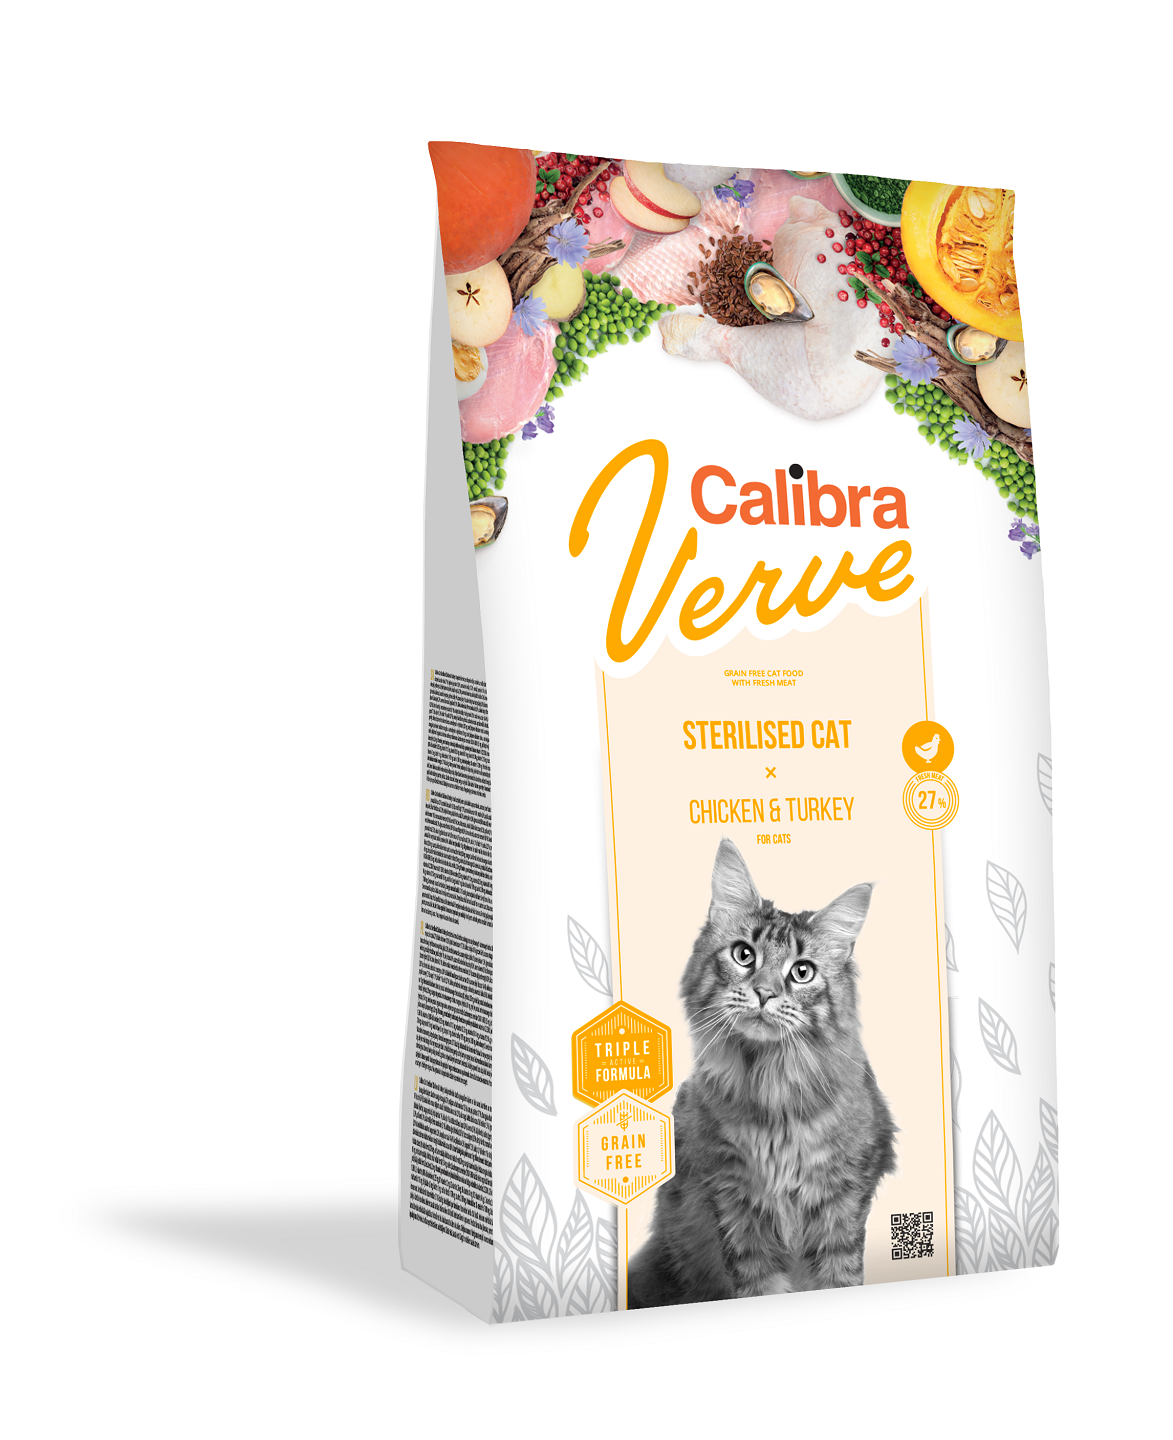 Calibra Cat Verve Grain Free Sterilised, Chicken & Turkey, 3.5 kg